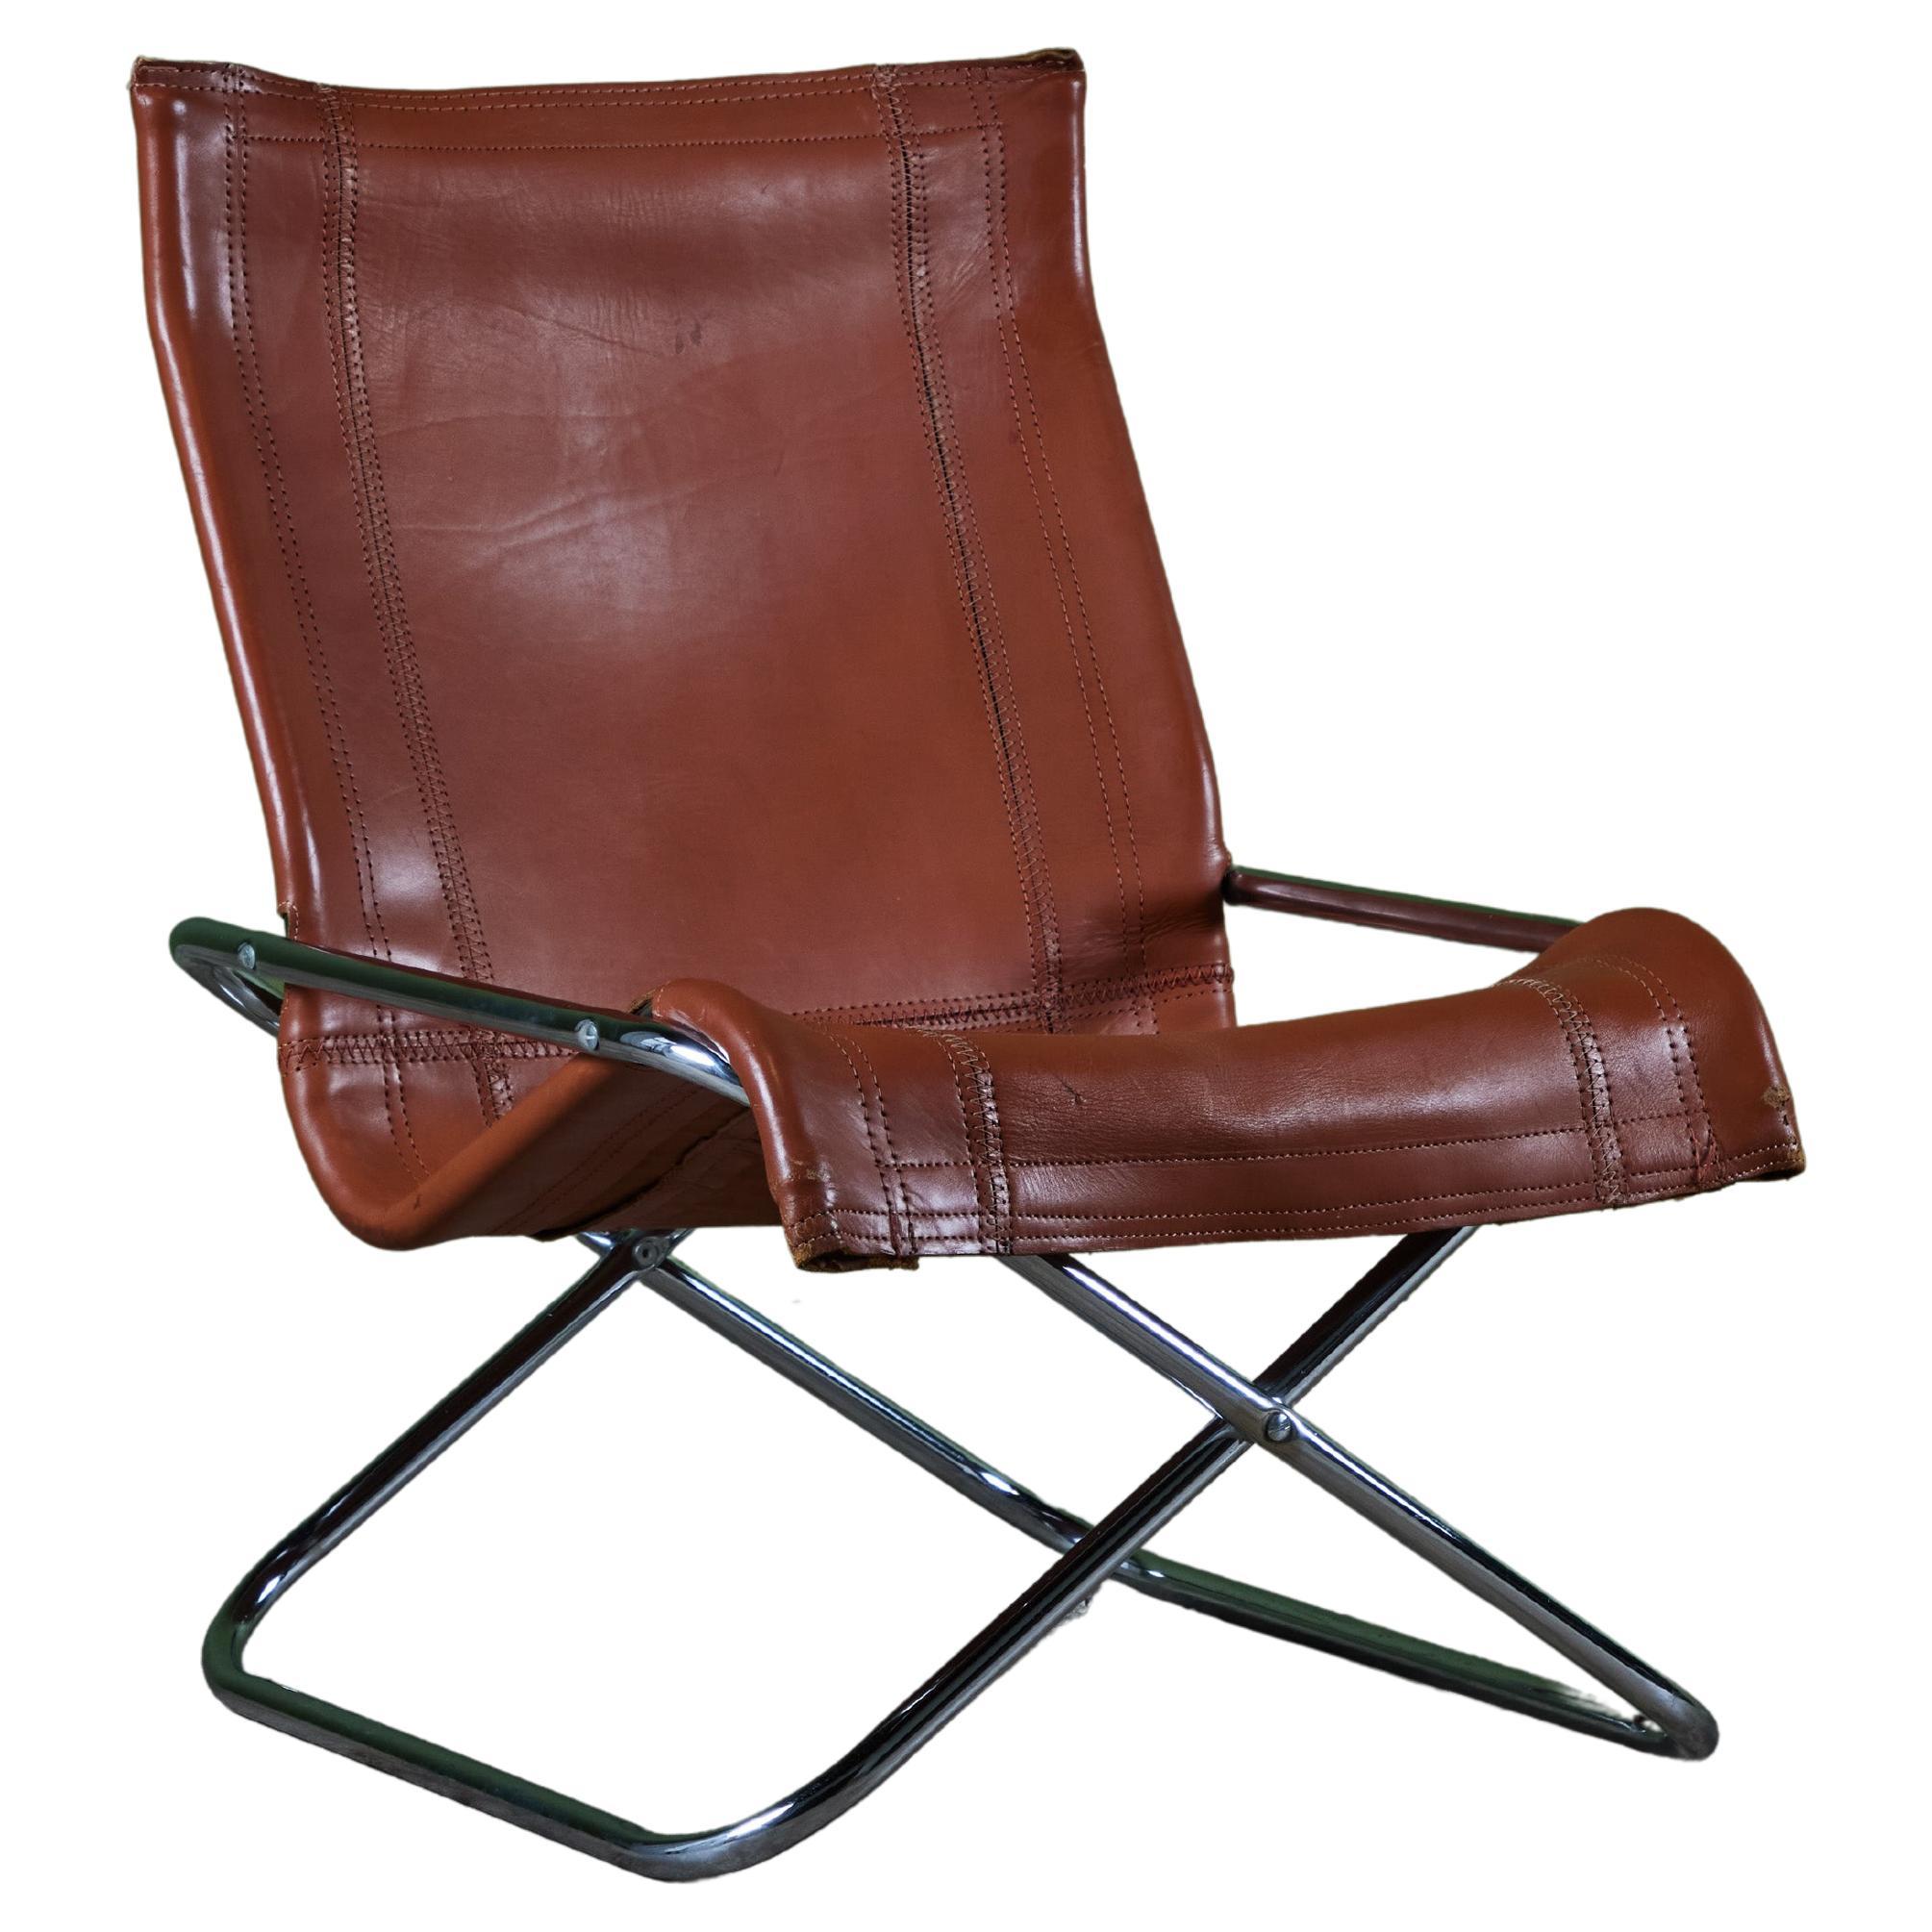 Chaise pliante japonaise en cuir Takeshi Nii 'NY